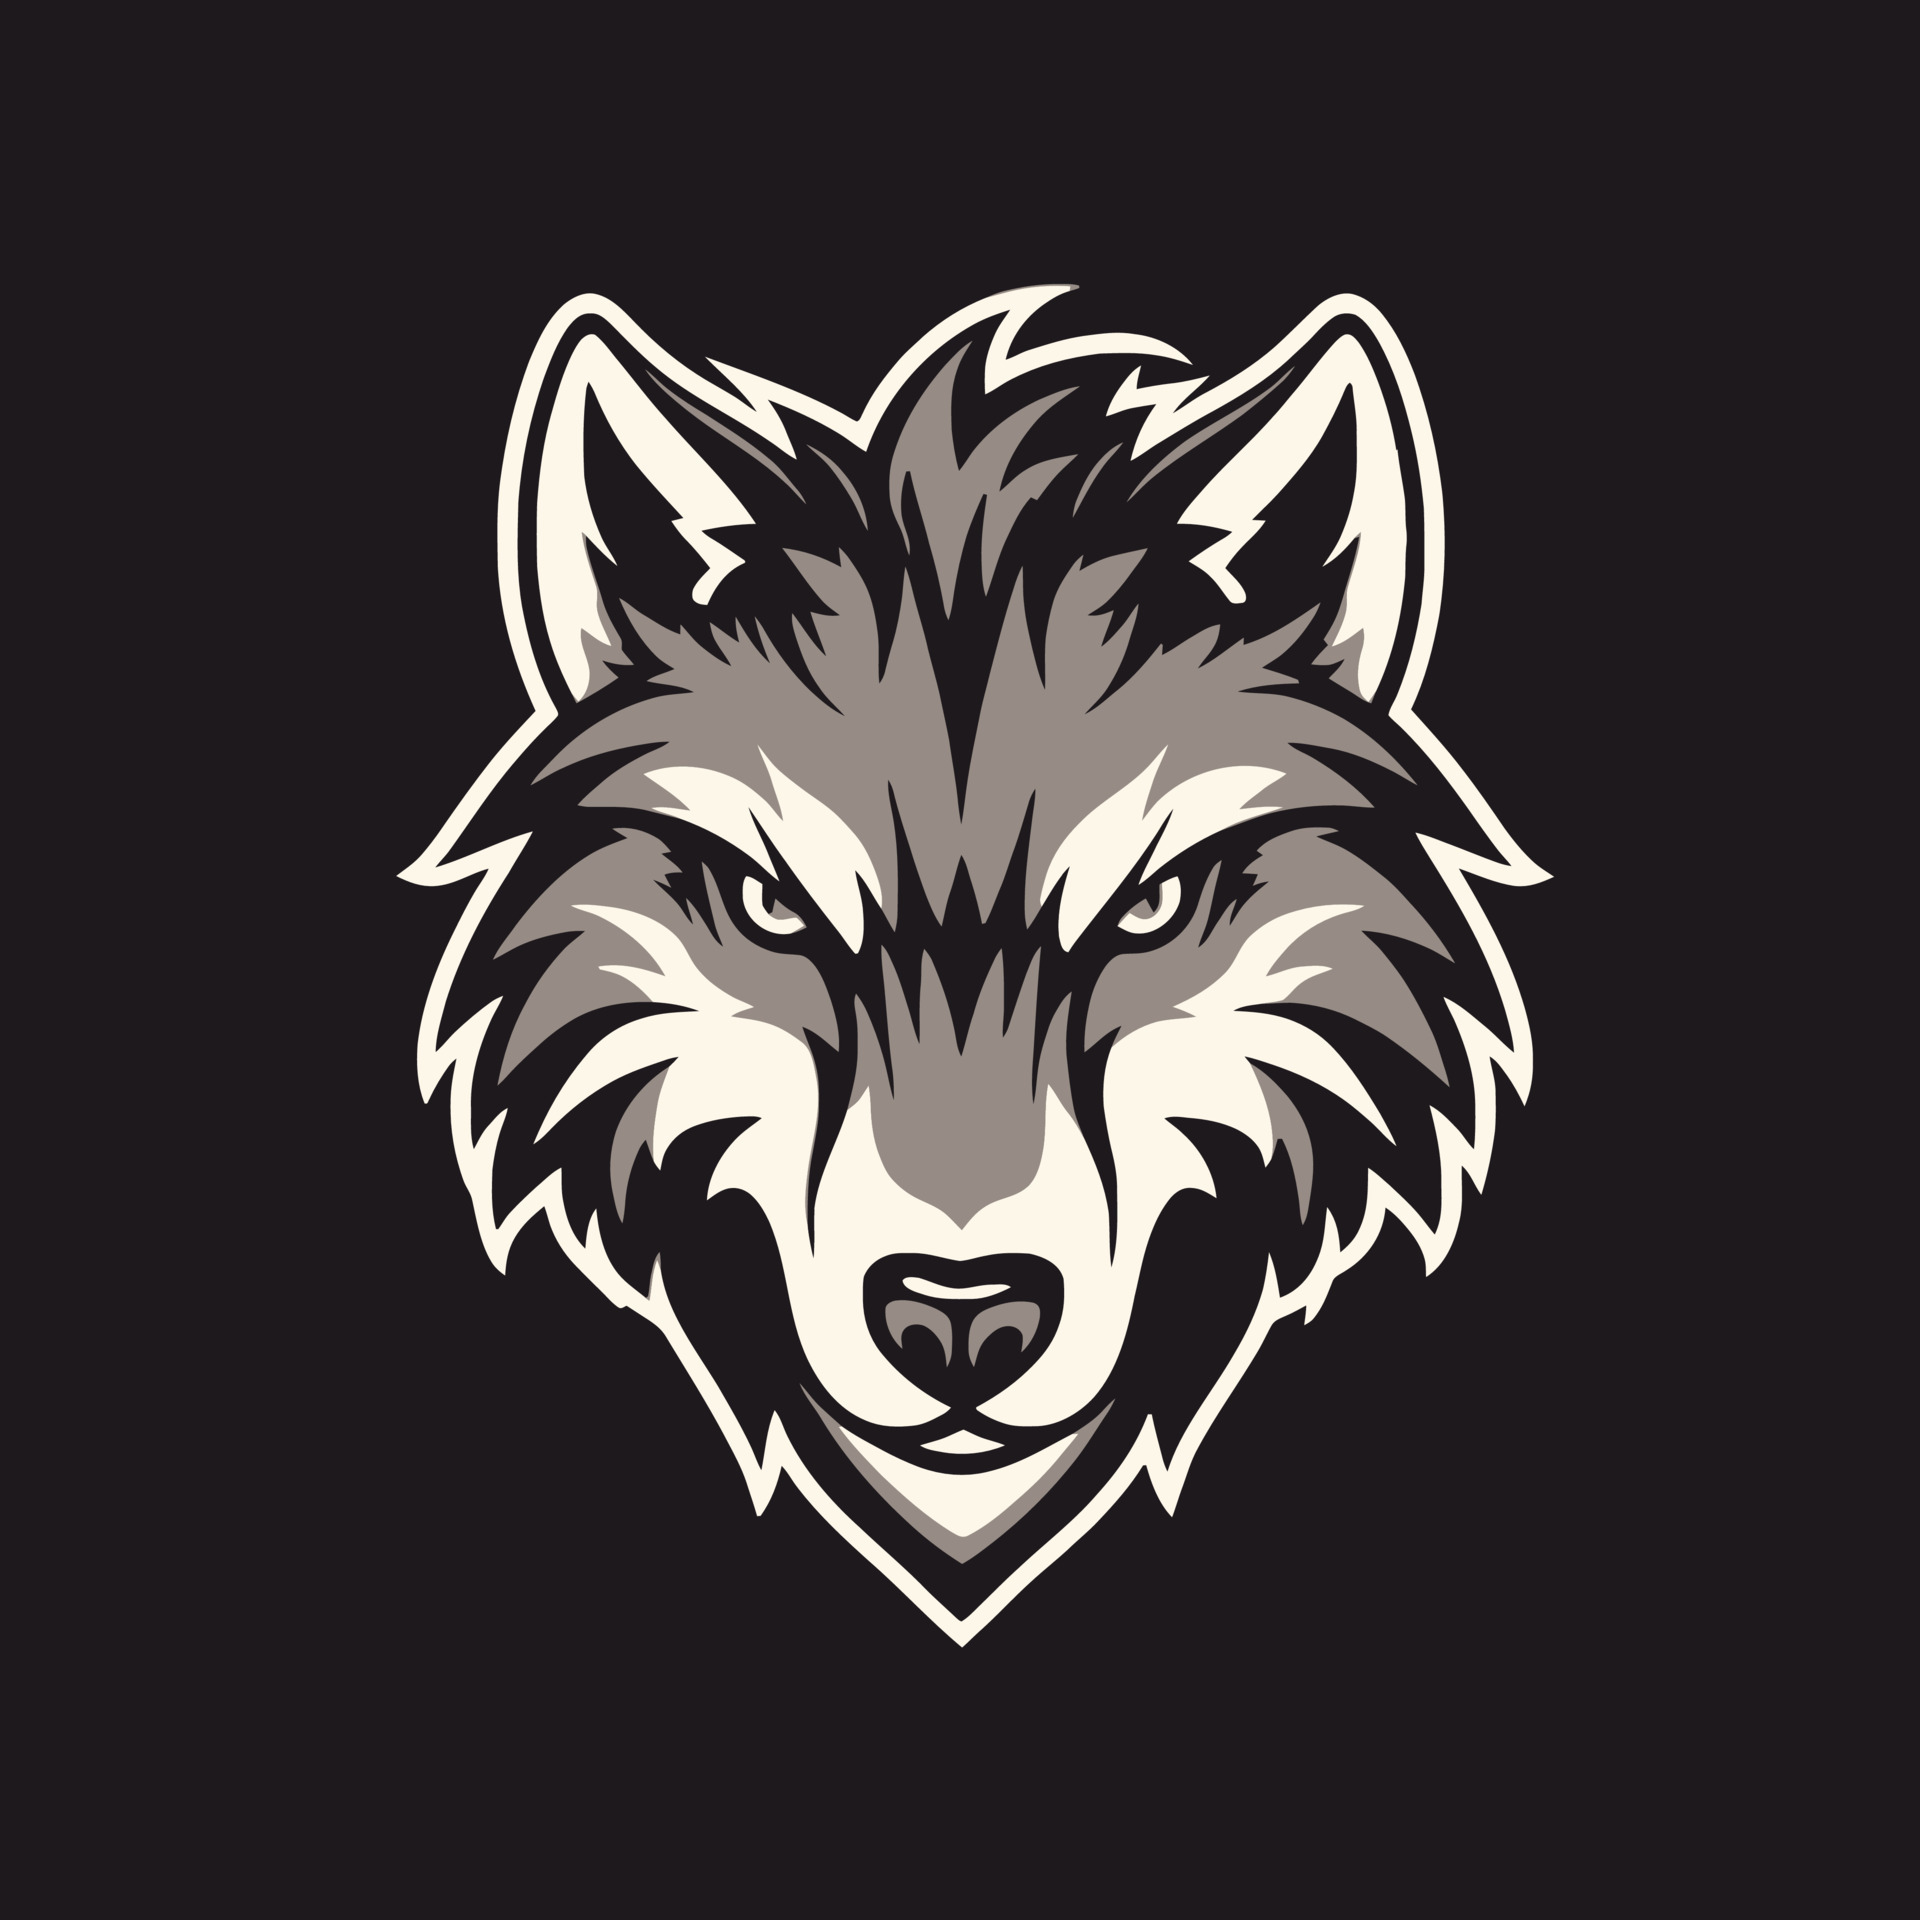 Wolf head logo vector - Animal Brand Symbol 24124807 Vector Art at Vecteezy